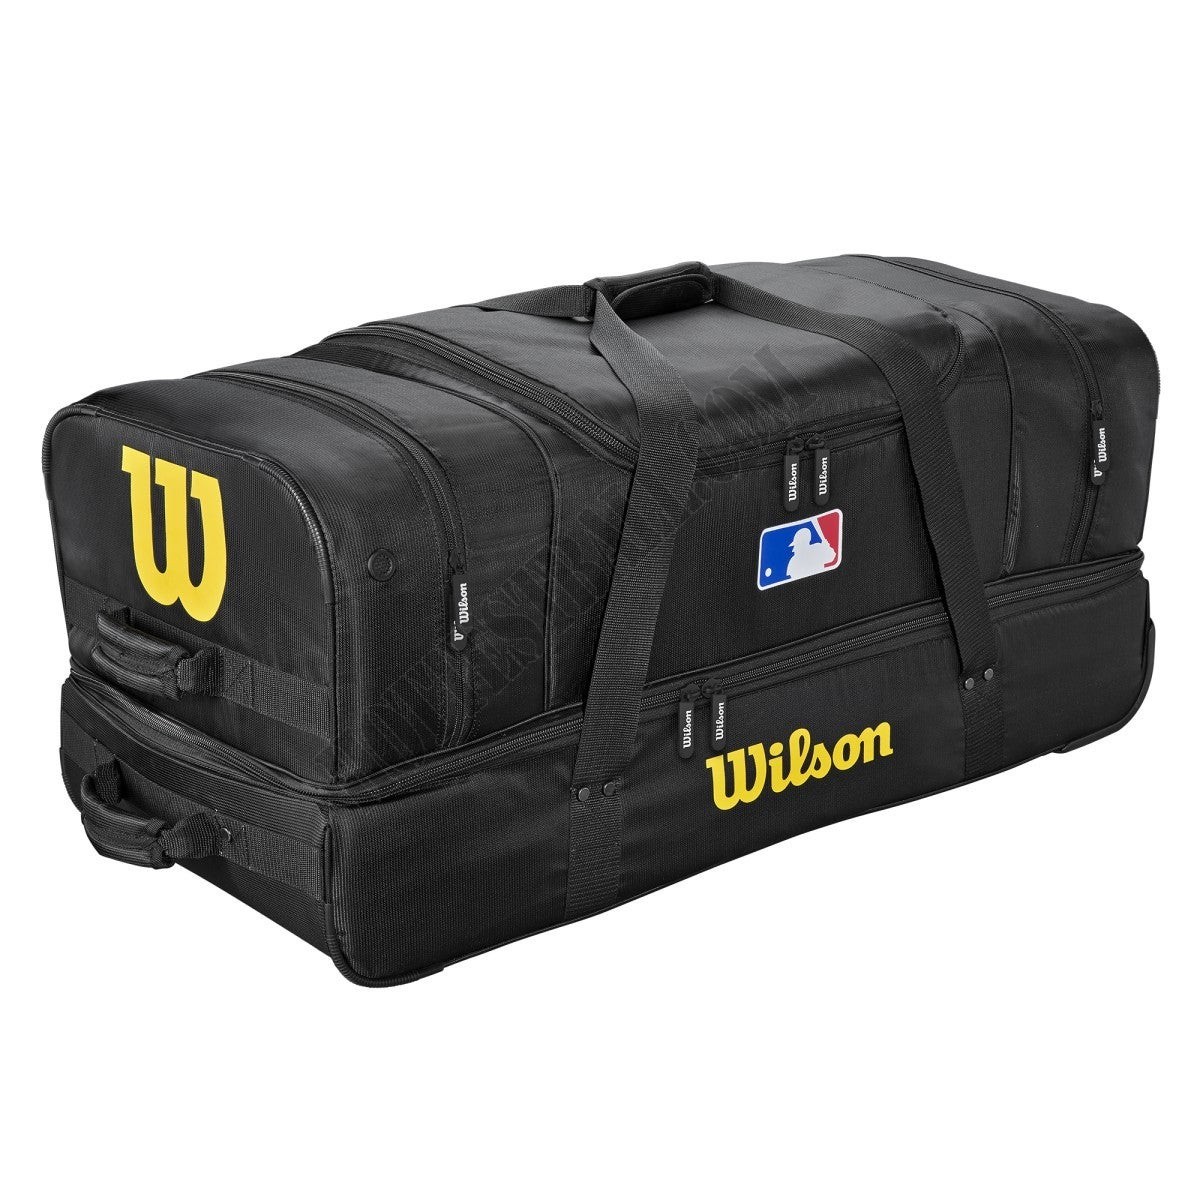 Wilson Umpire Bag - Wilson Discount Store - Wilson Umpire Bag - Wilson Discount Store